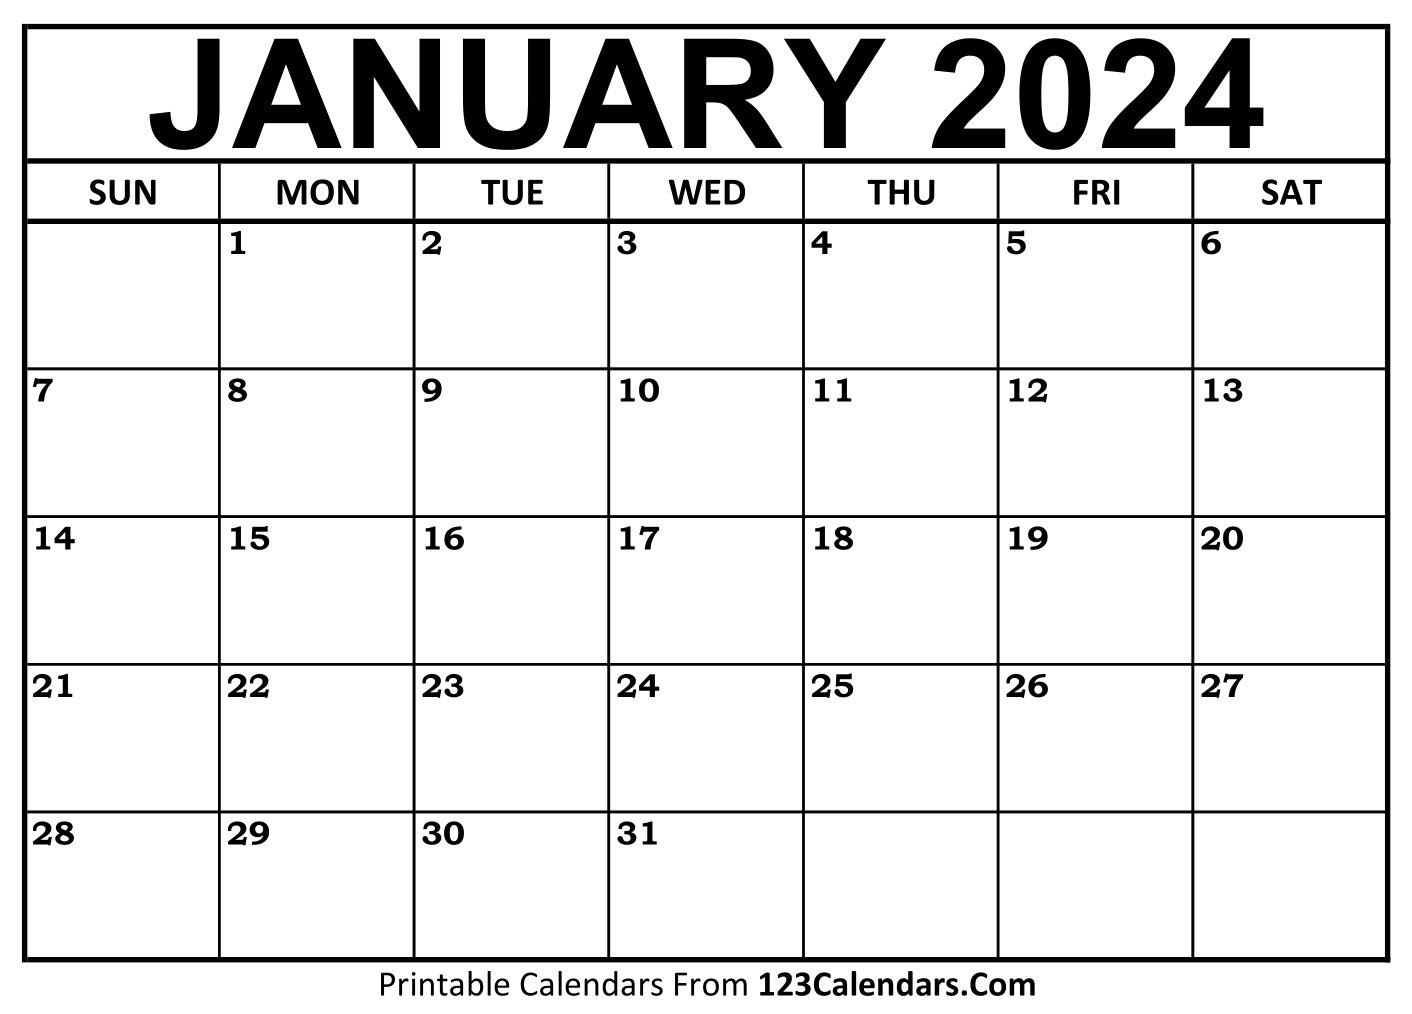 Printable January 2024 Calendar Templates - 123Calendars | Free Printable Calendar Of 2024